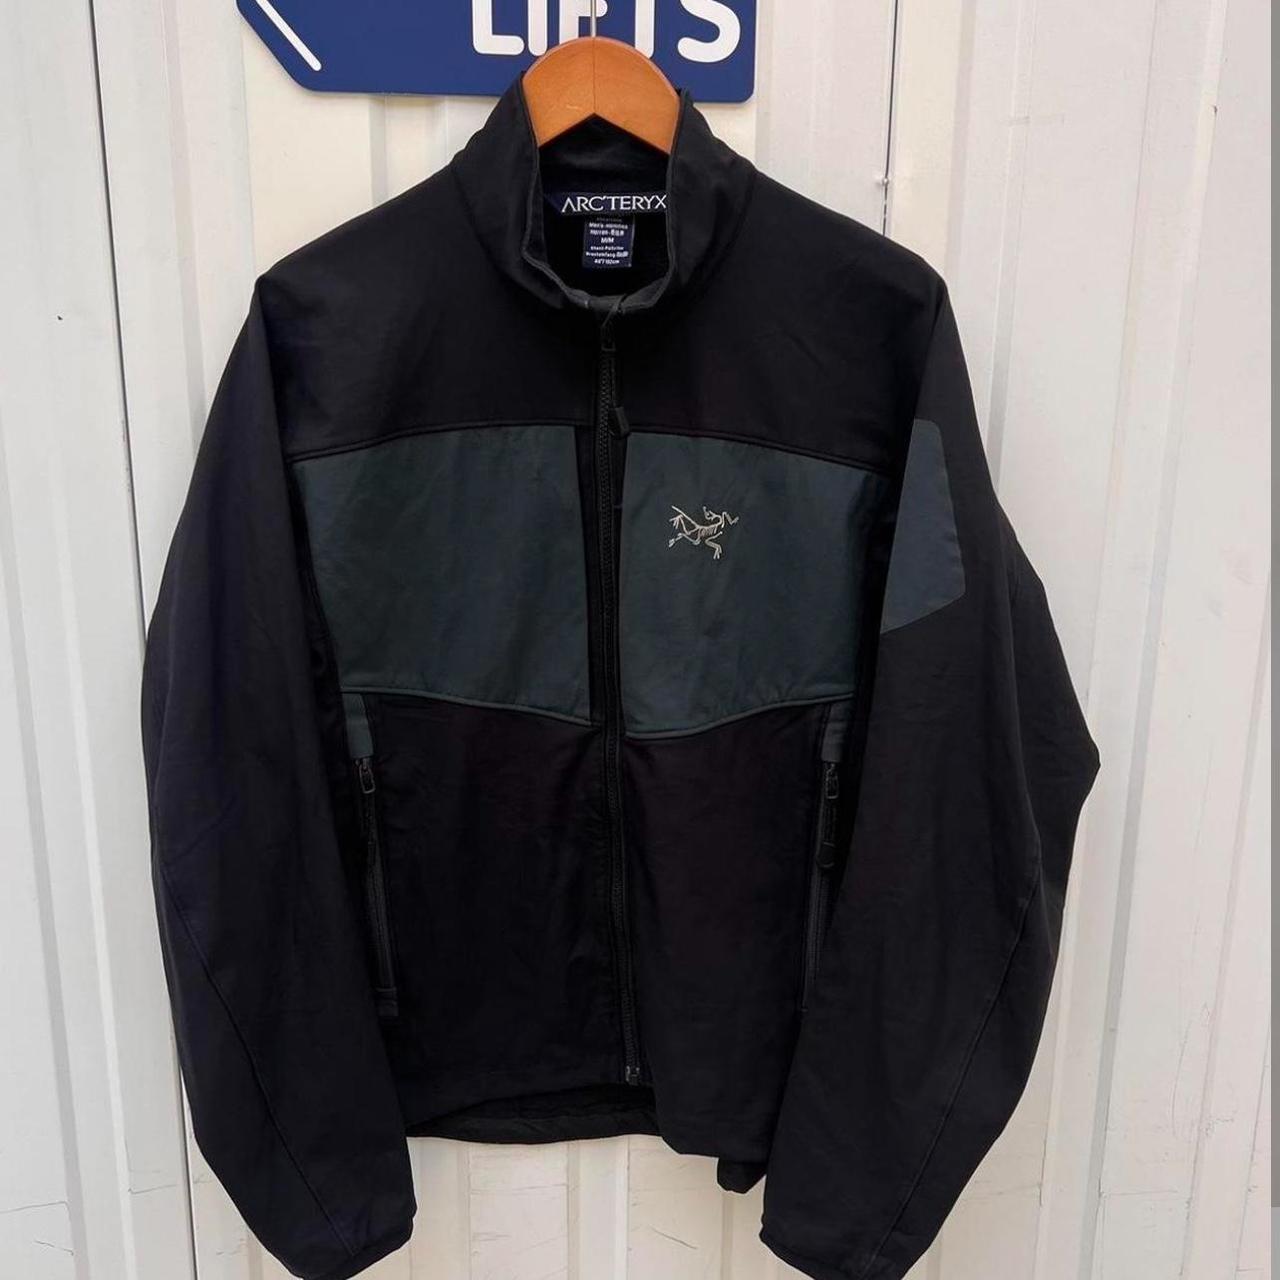 Vintage Arc’teryx jacket with logo on front chest.... - Depop